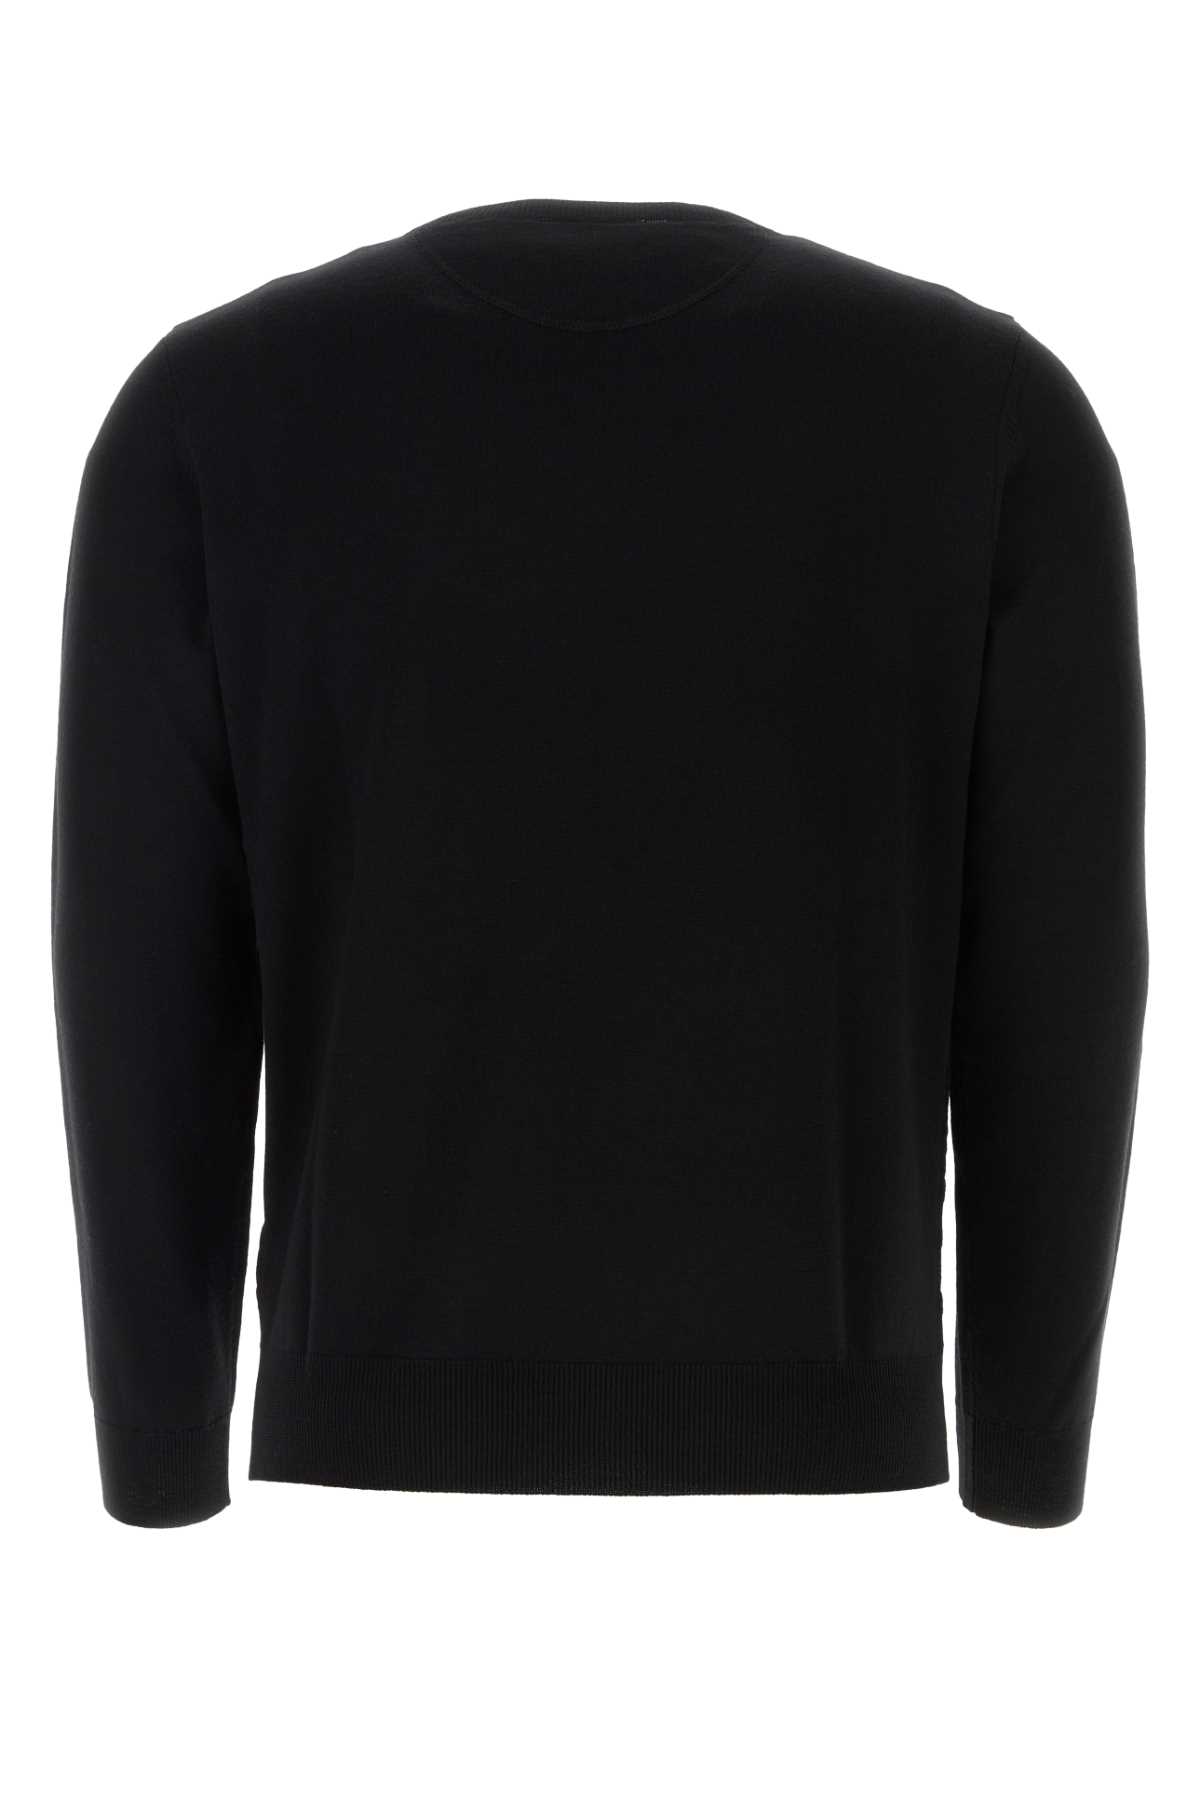 Valentino Black Wool Sweater In Neronero